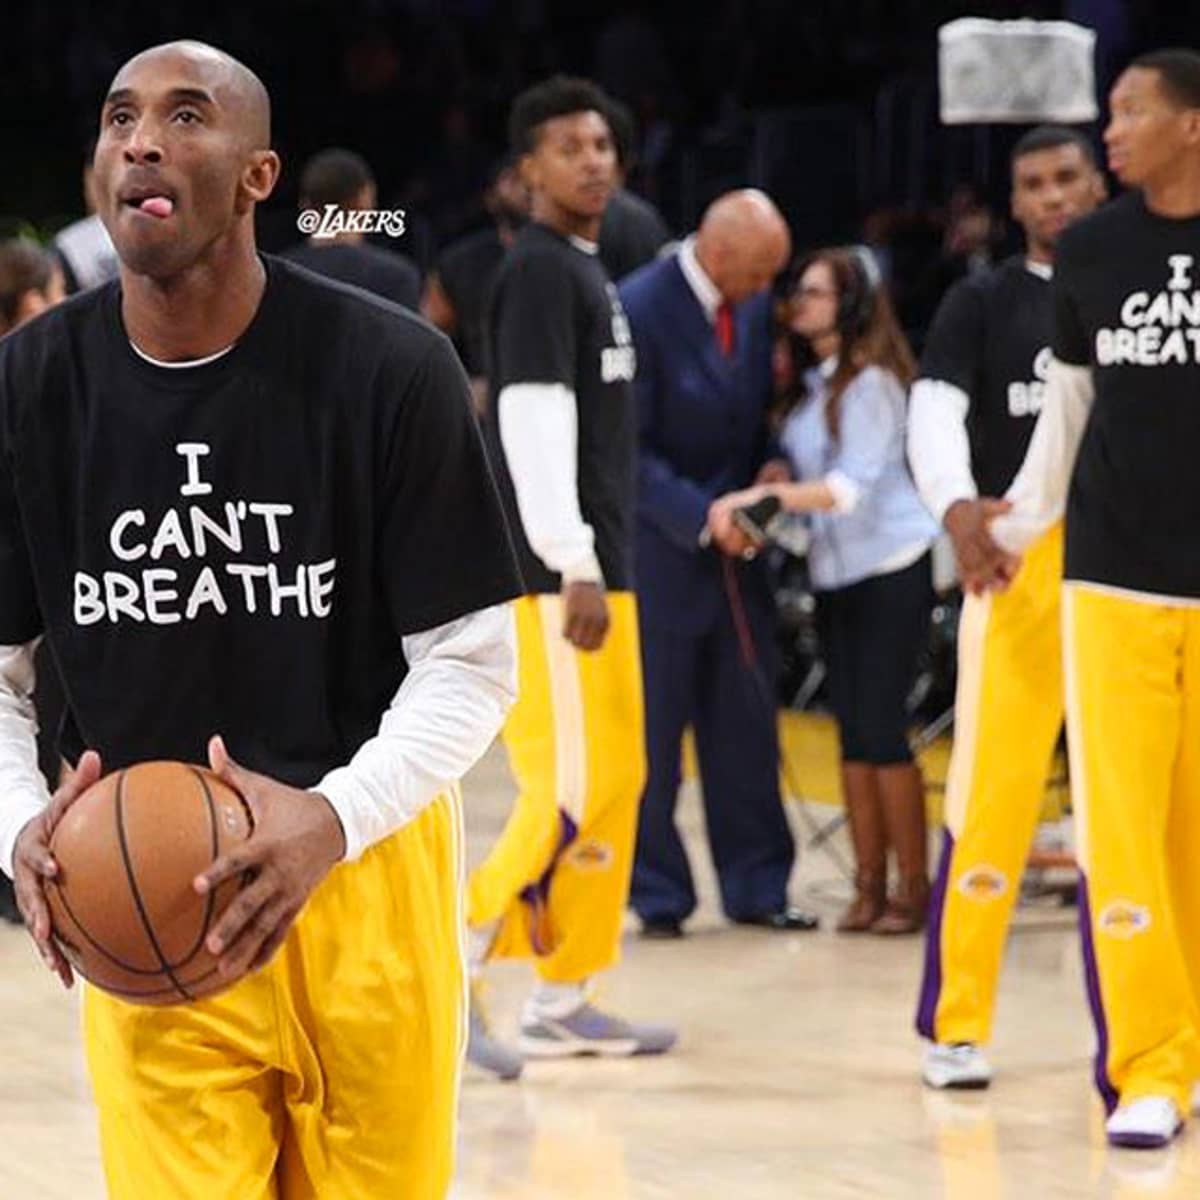 LeBron James wears I Can't Breathe shirt at NBA game in New York, Eric  Garner